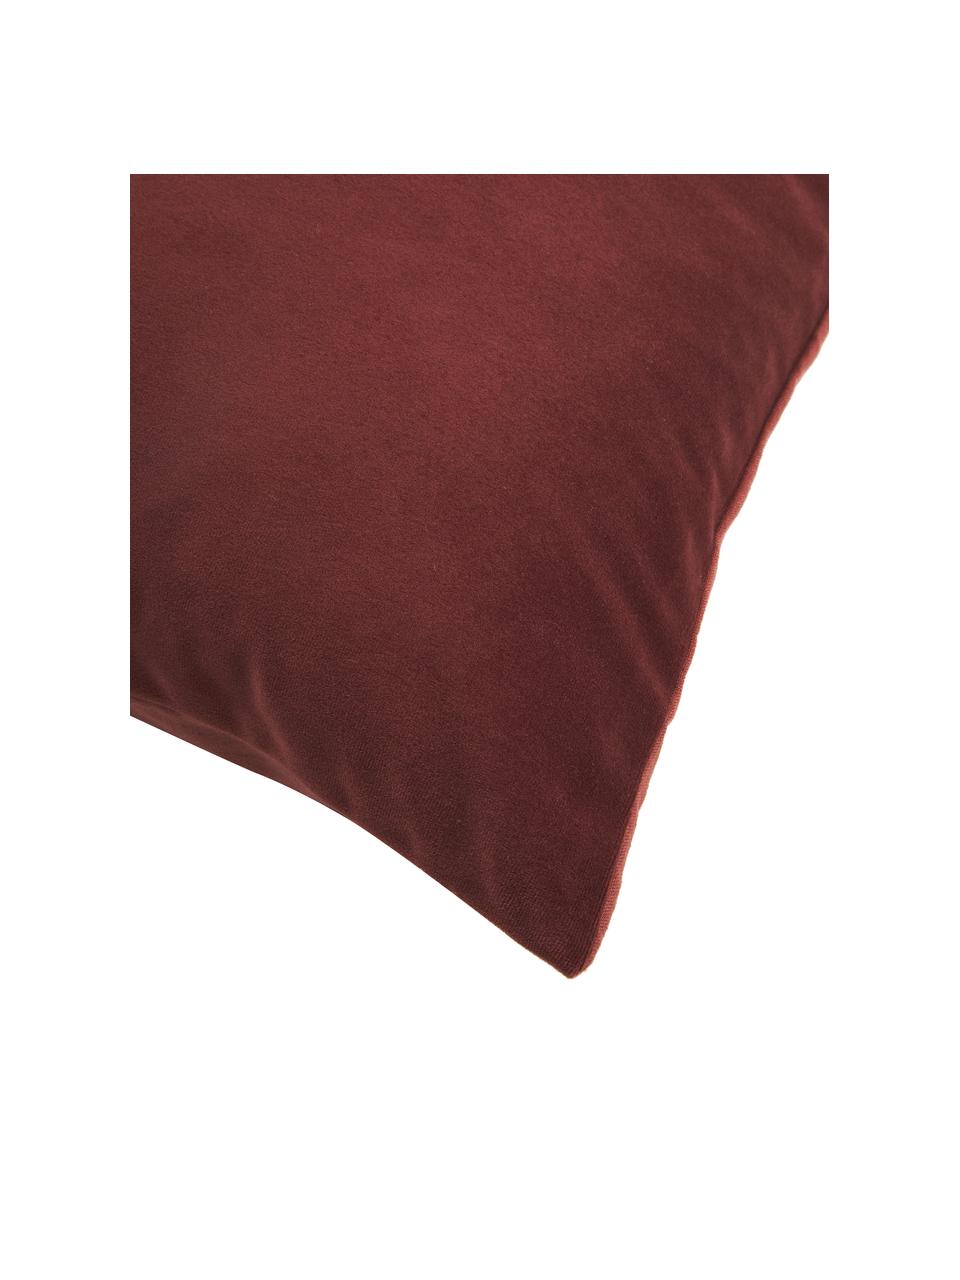 Federa arredo in velluto/lino rosso Adelaide, Rosso, rosa, Larg. 45 x Lung. 45 cm